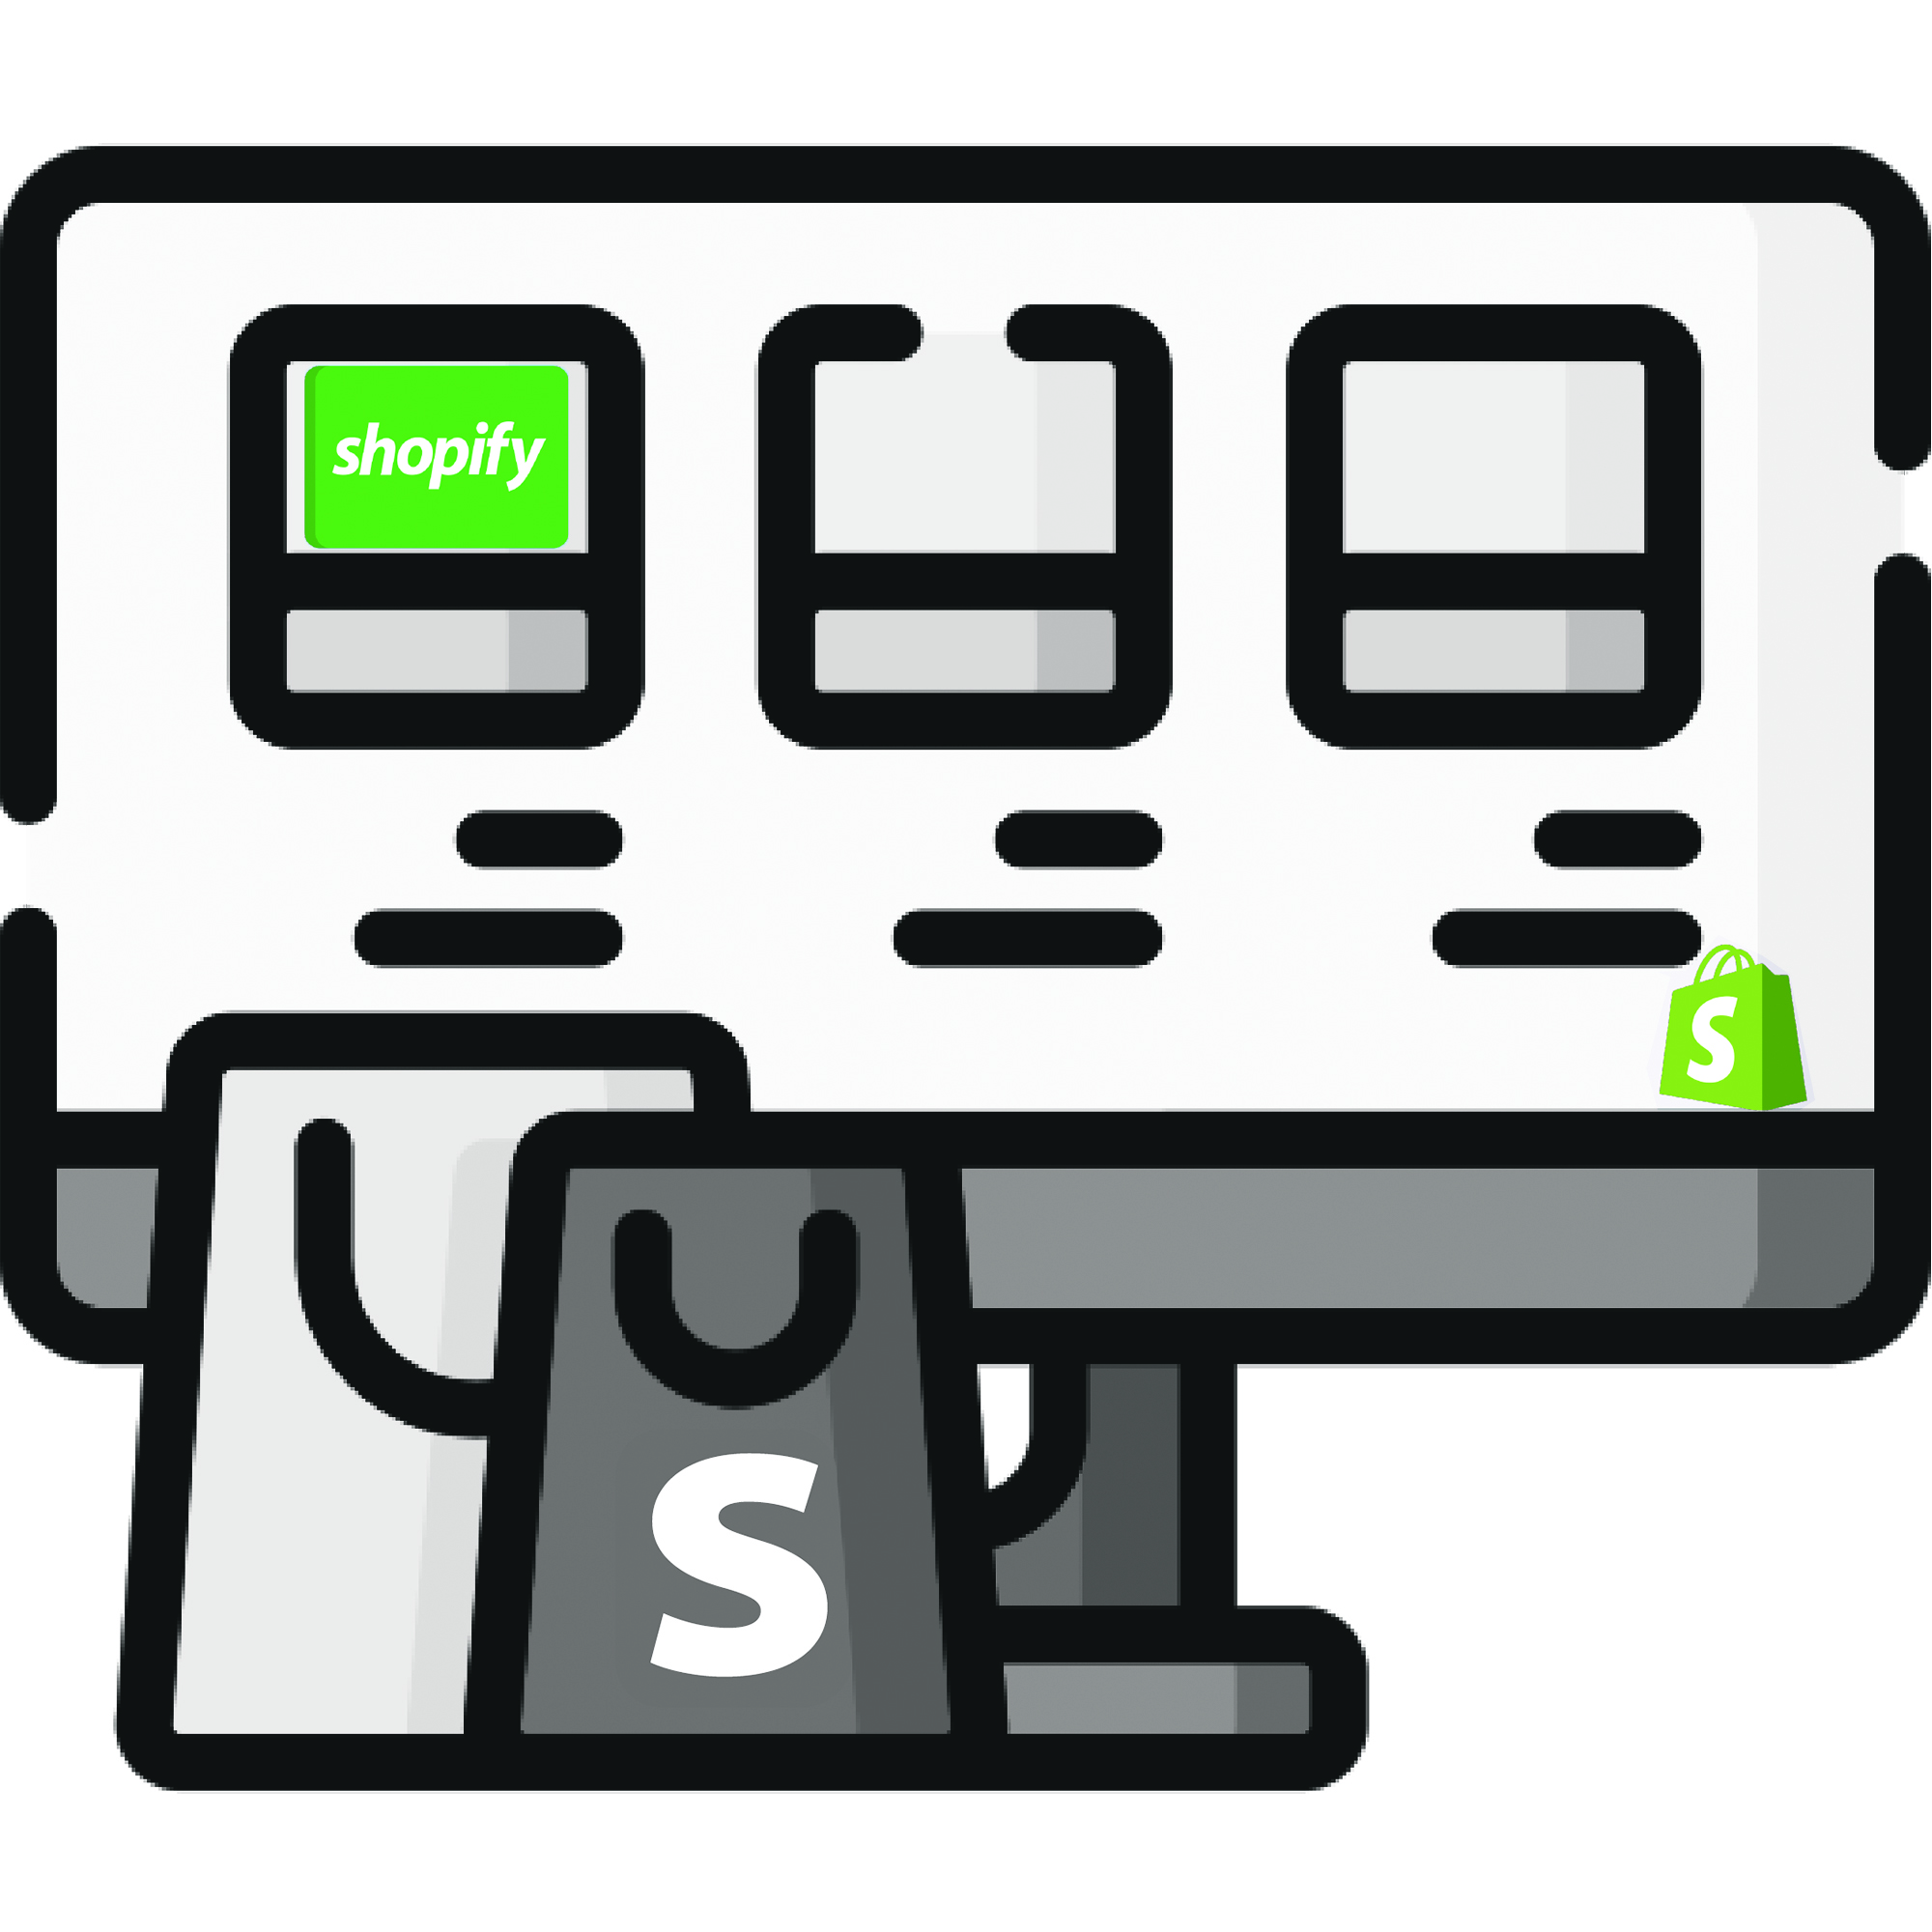 shopify website design services shopify web designers shopify developer ecommerce website